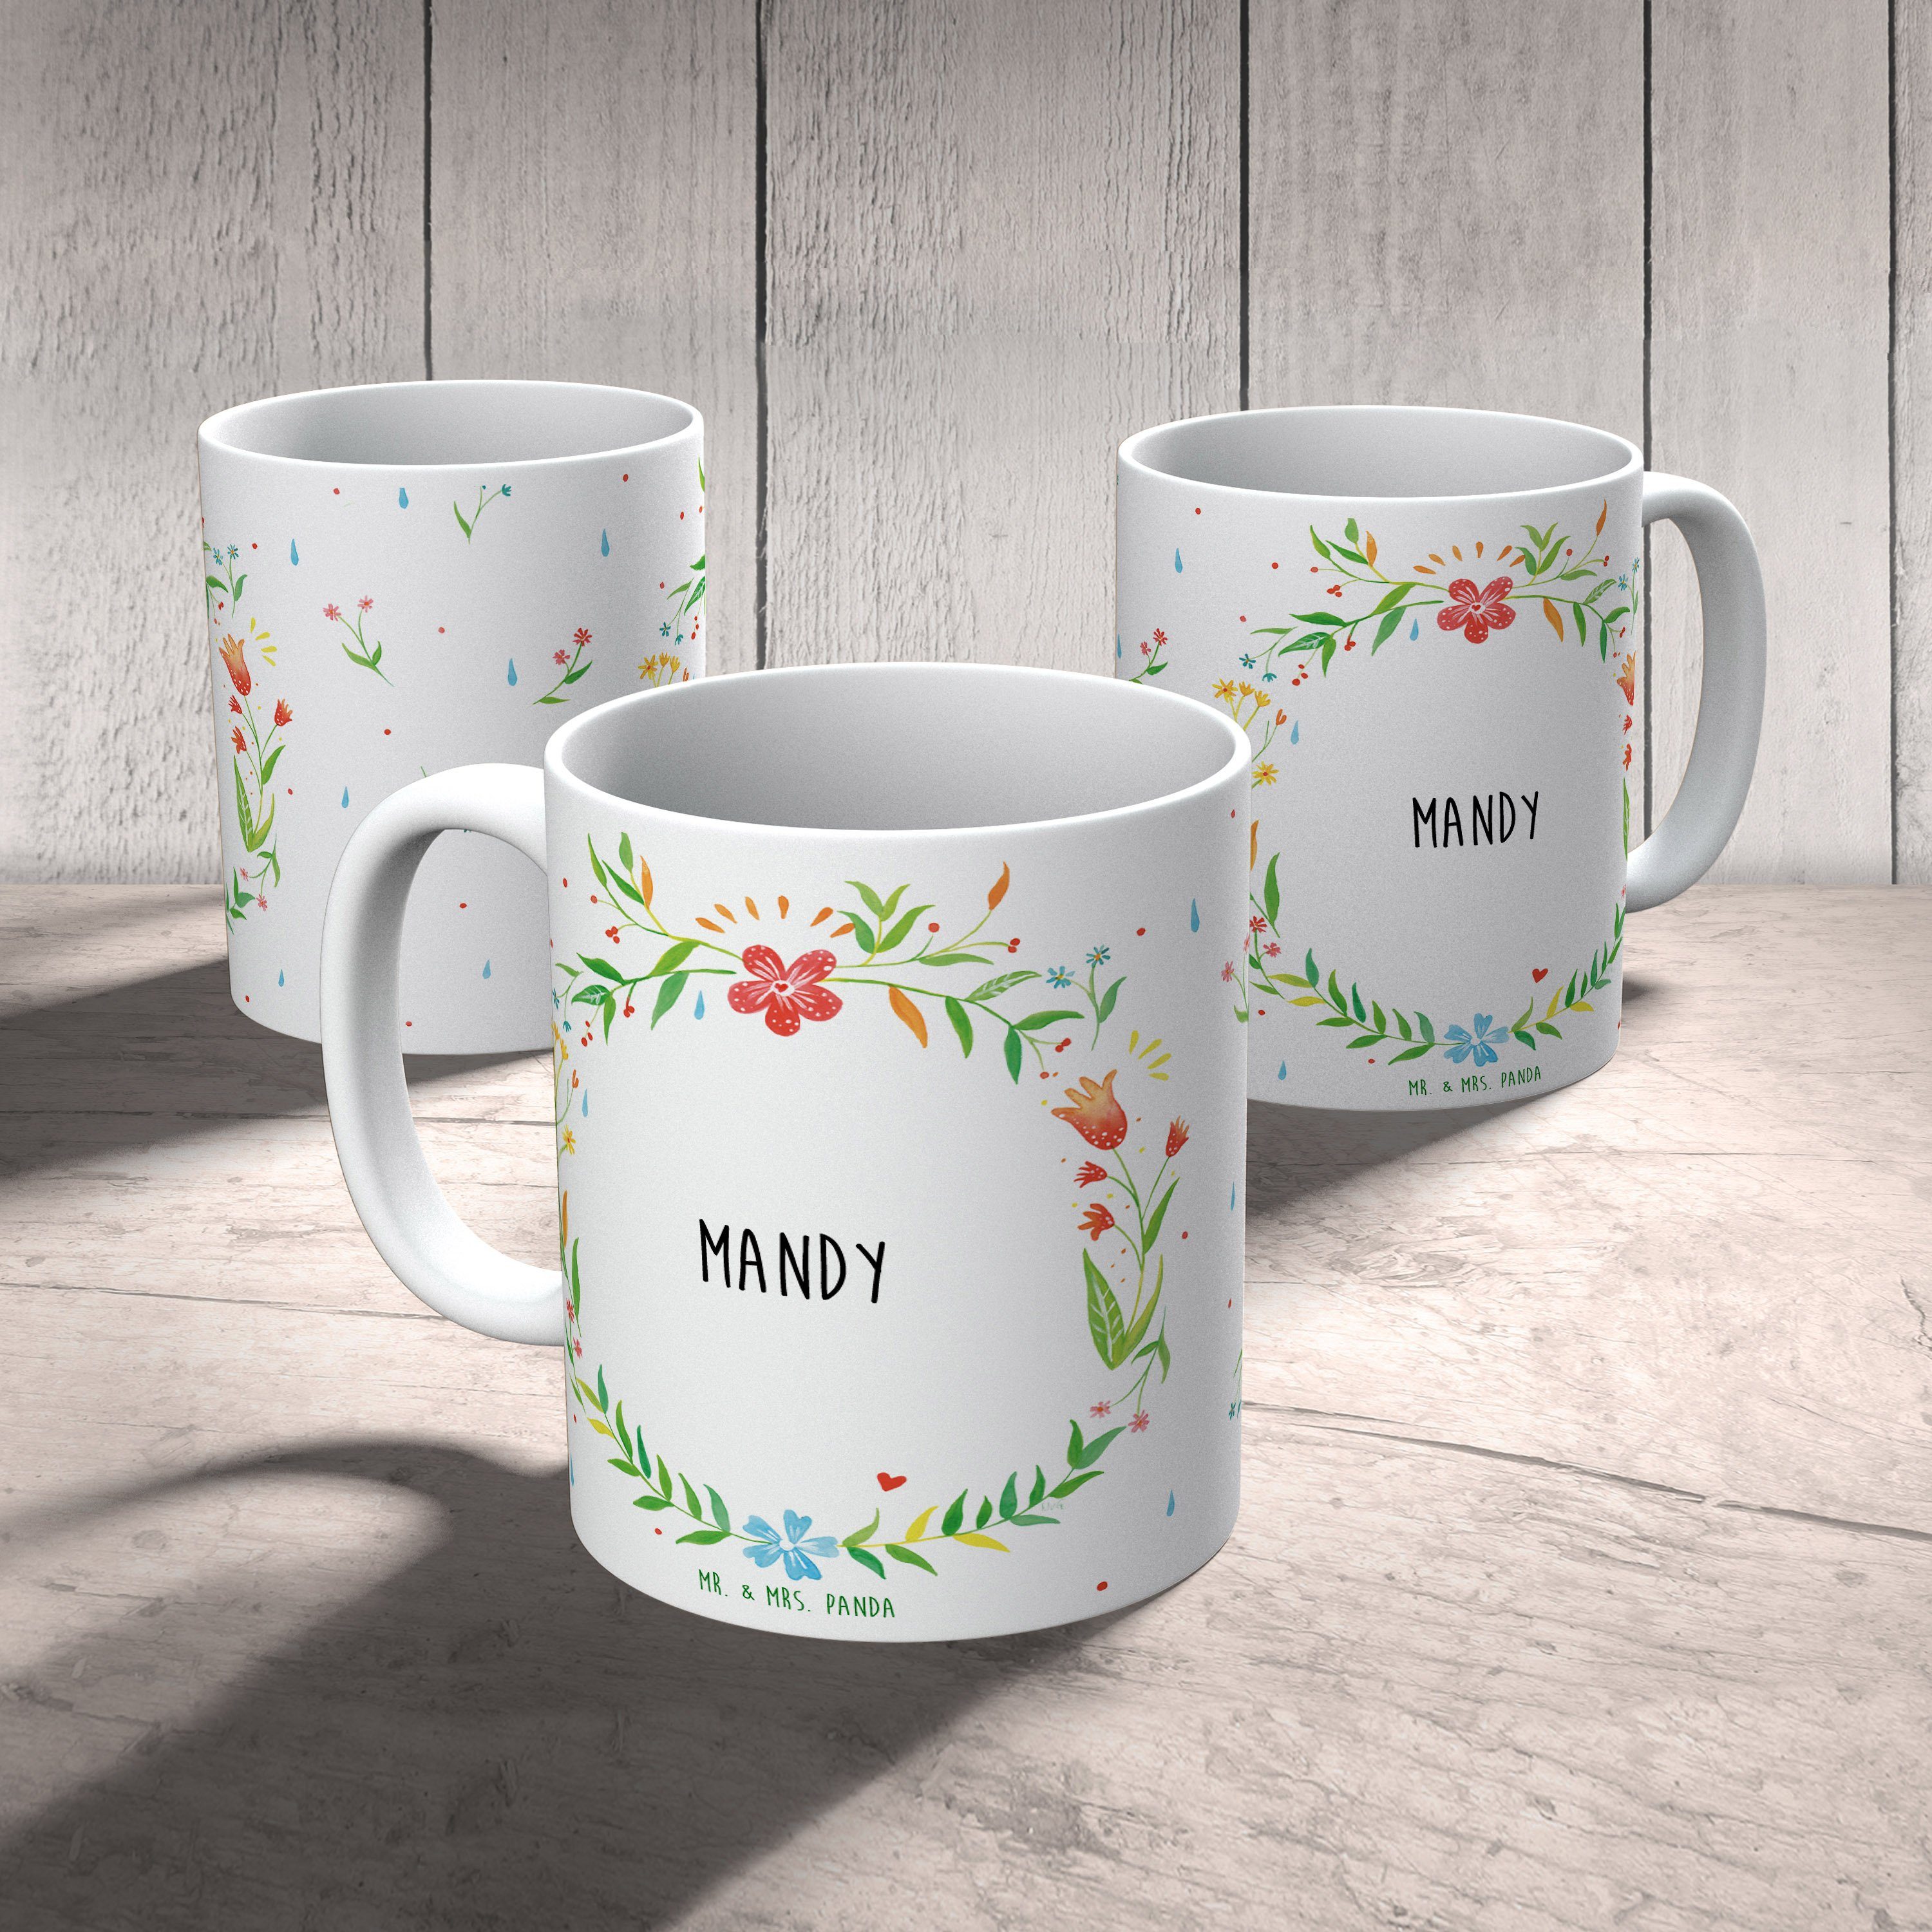 Mandy & Tasse Panda Mr. Sprüche, Keramiktass, Keramik Kaffeetasse, Geschenk, Tasse Büro Tasse, - Mrs.